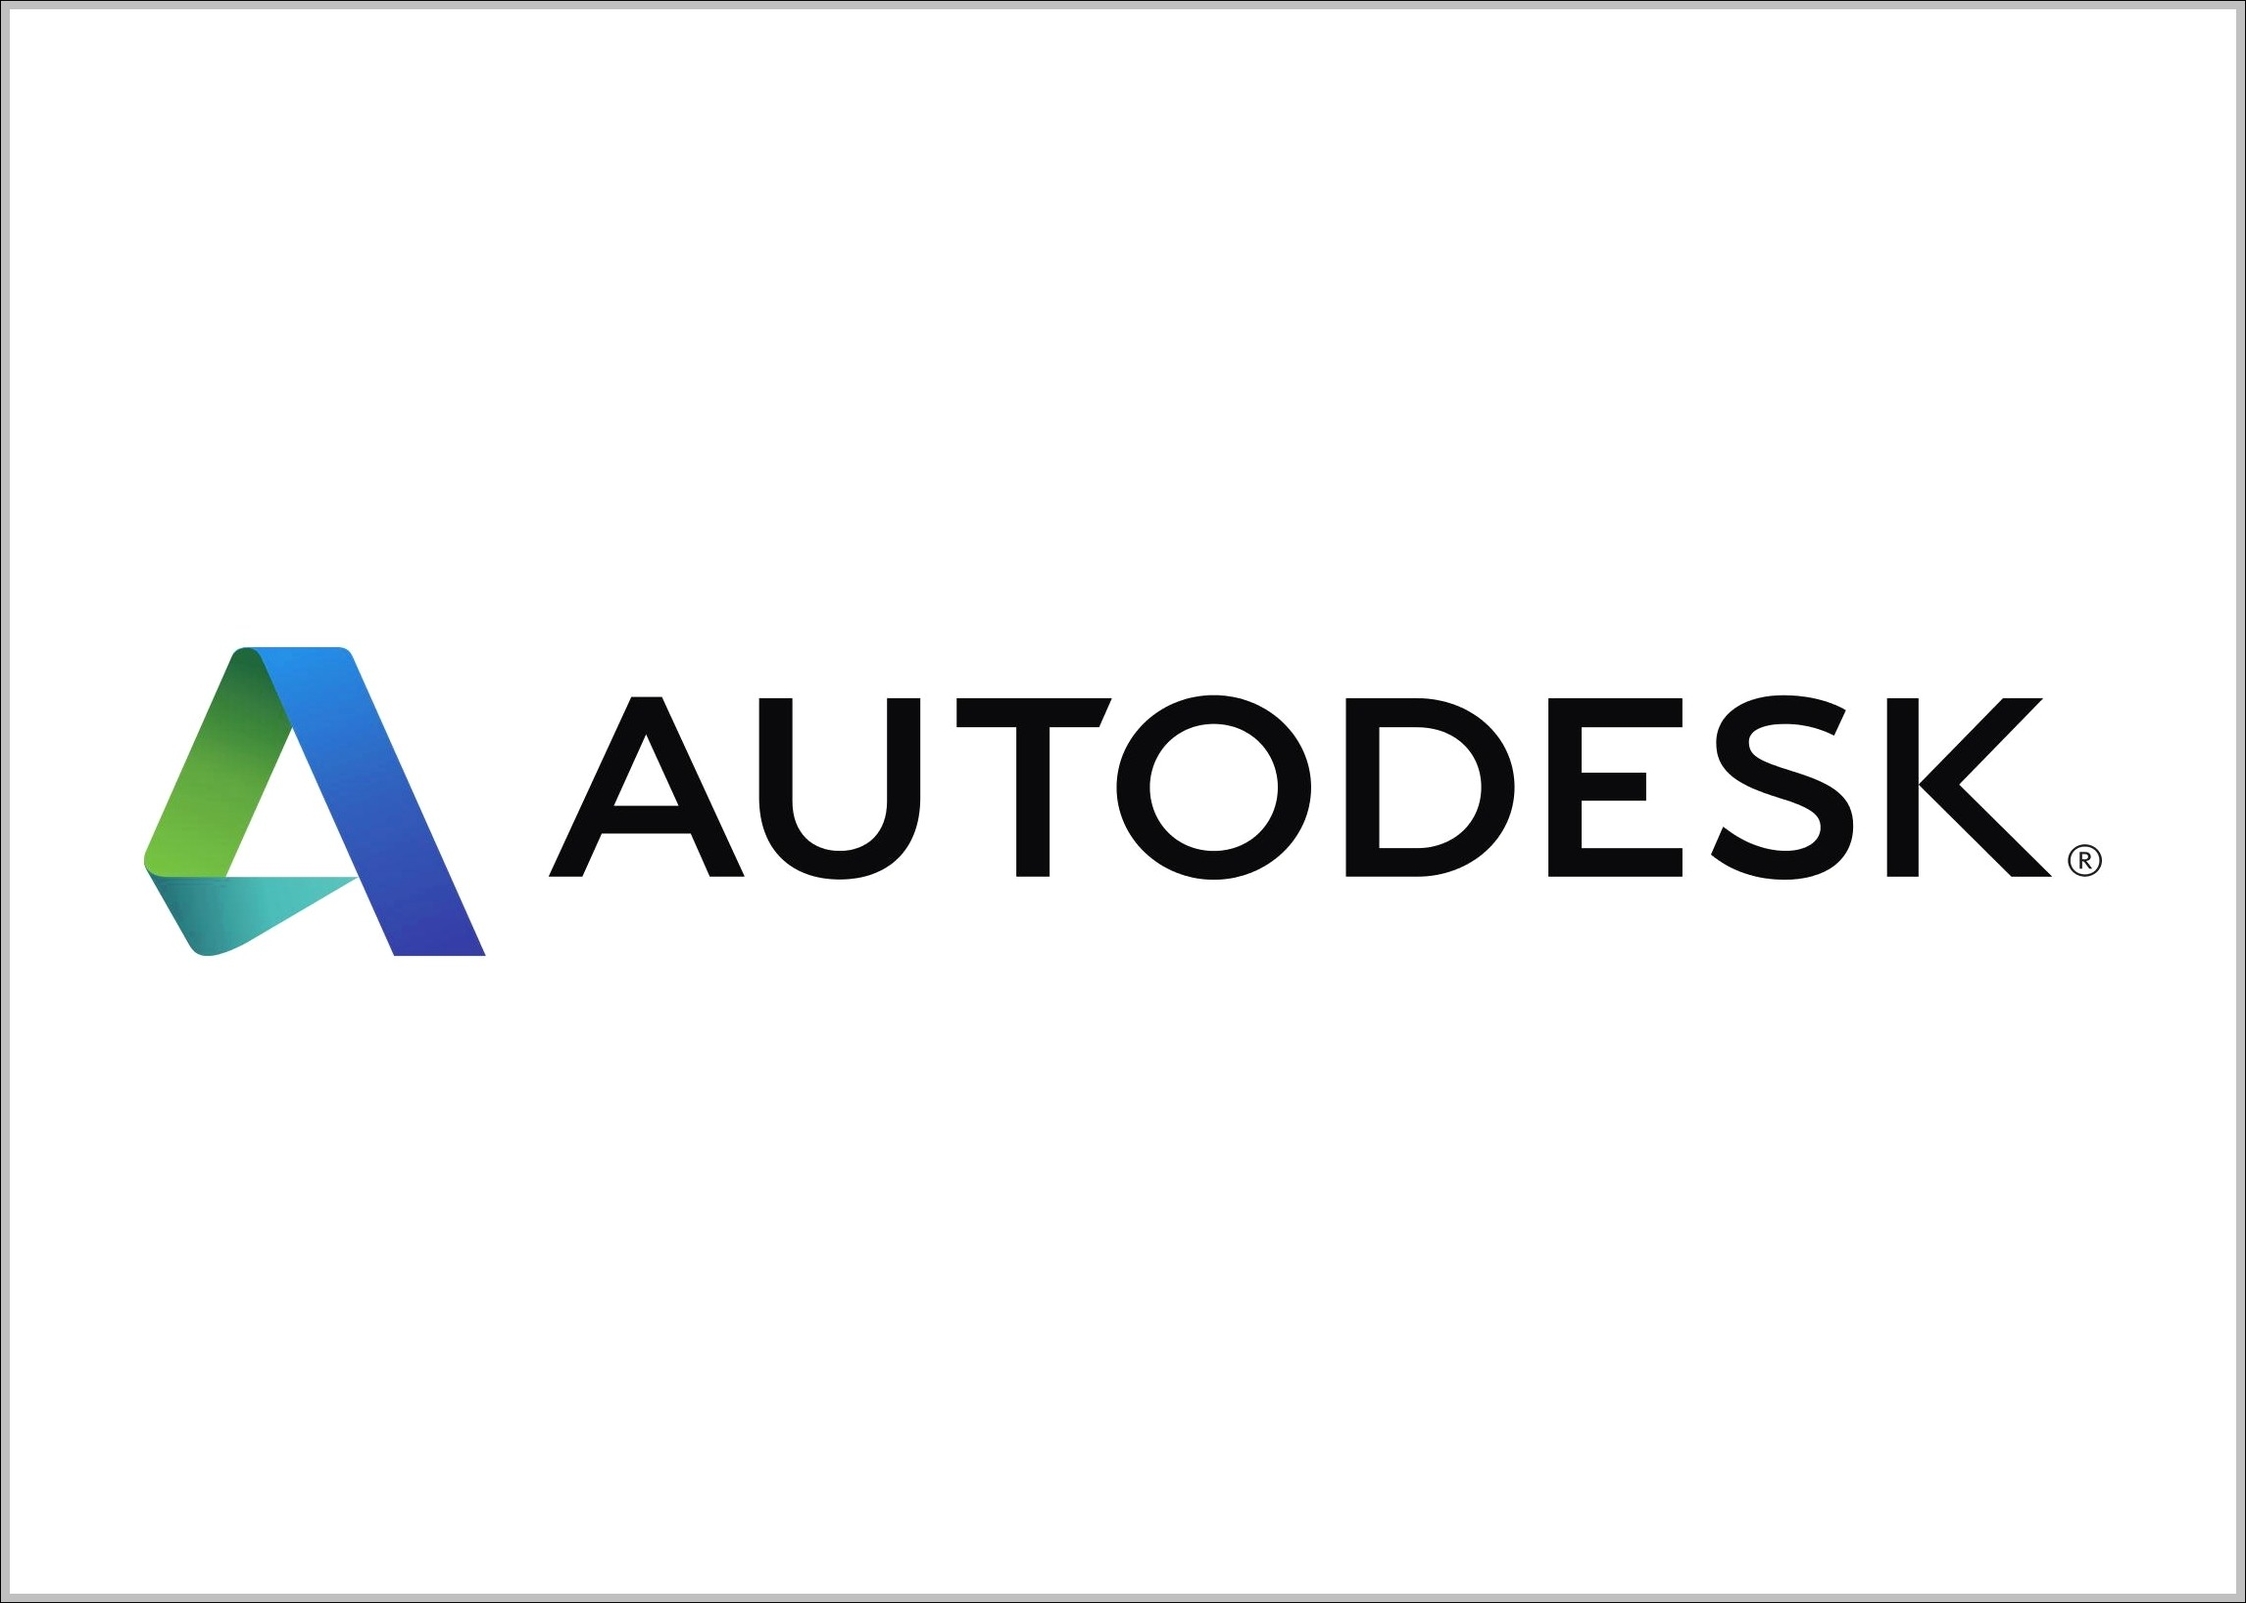 Autodesk logo and symbol